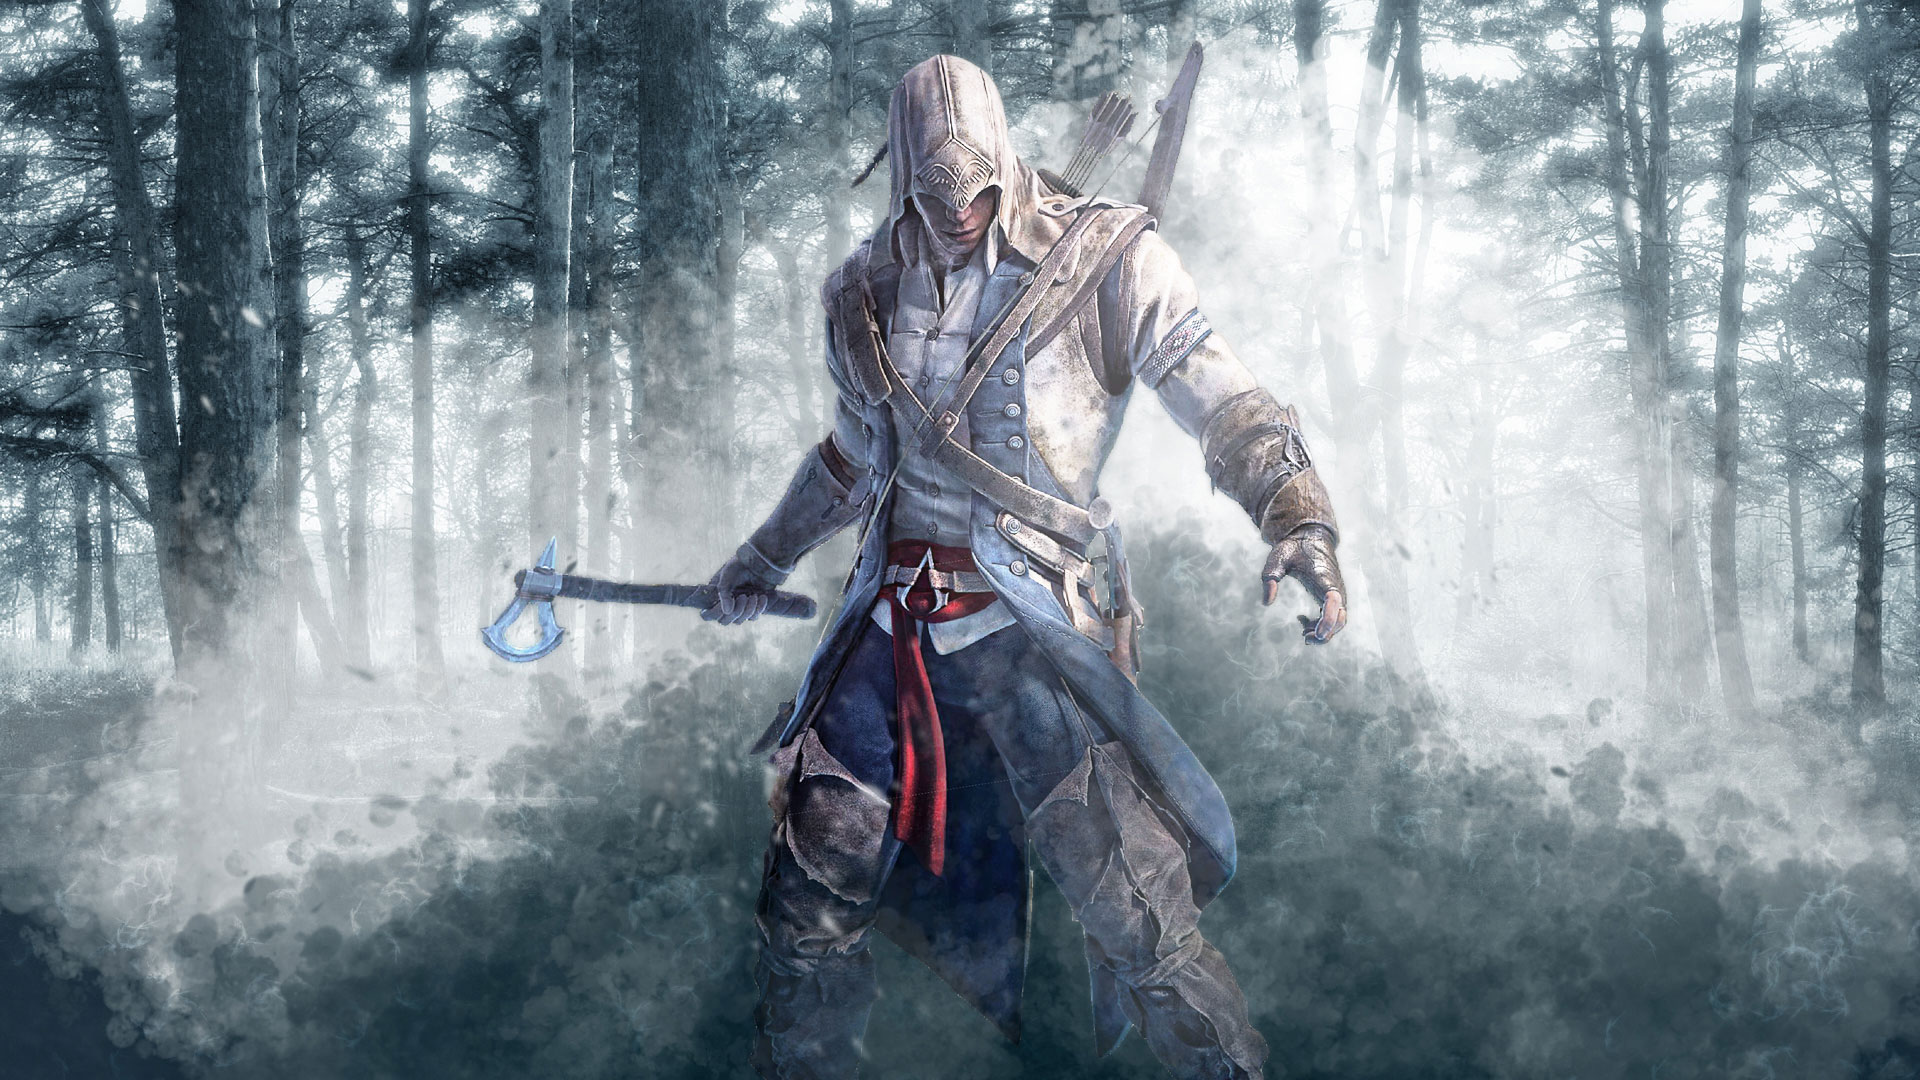 Assassin's Creed 3 Wallpaper 1920x1080 - WallpaperSafari